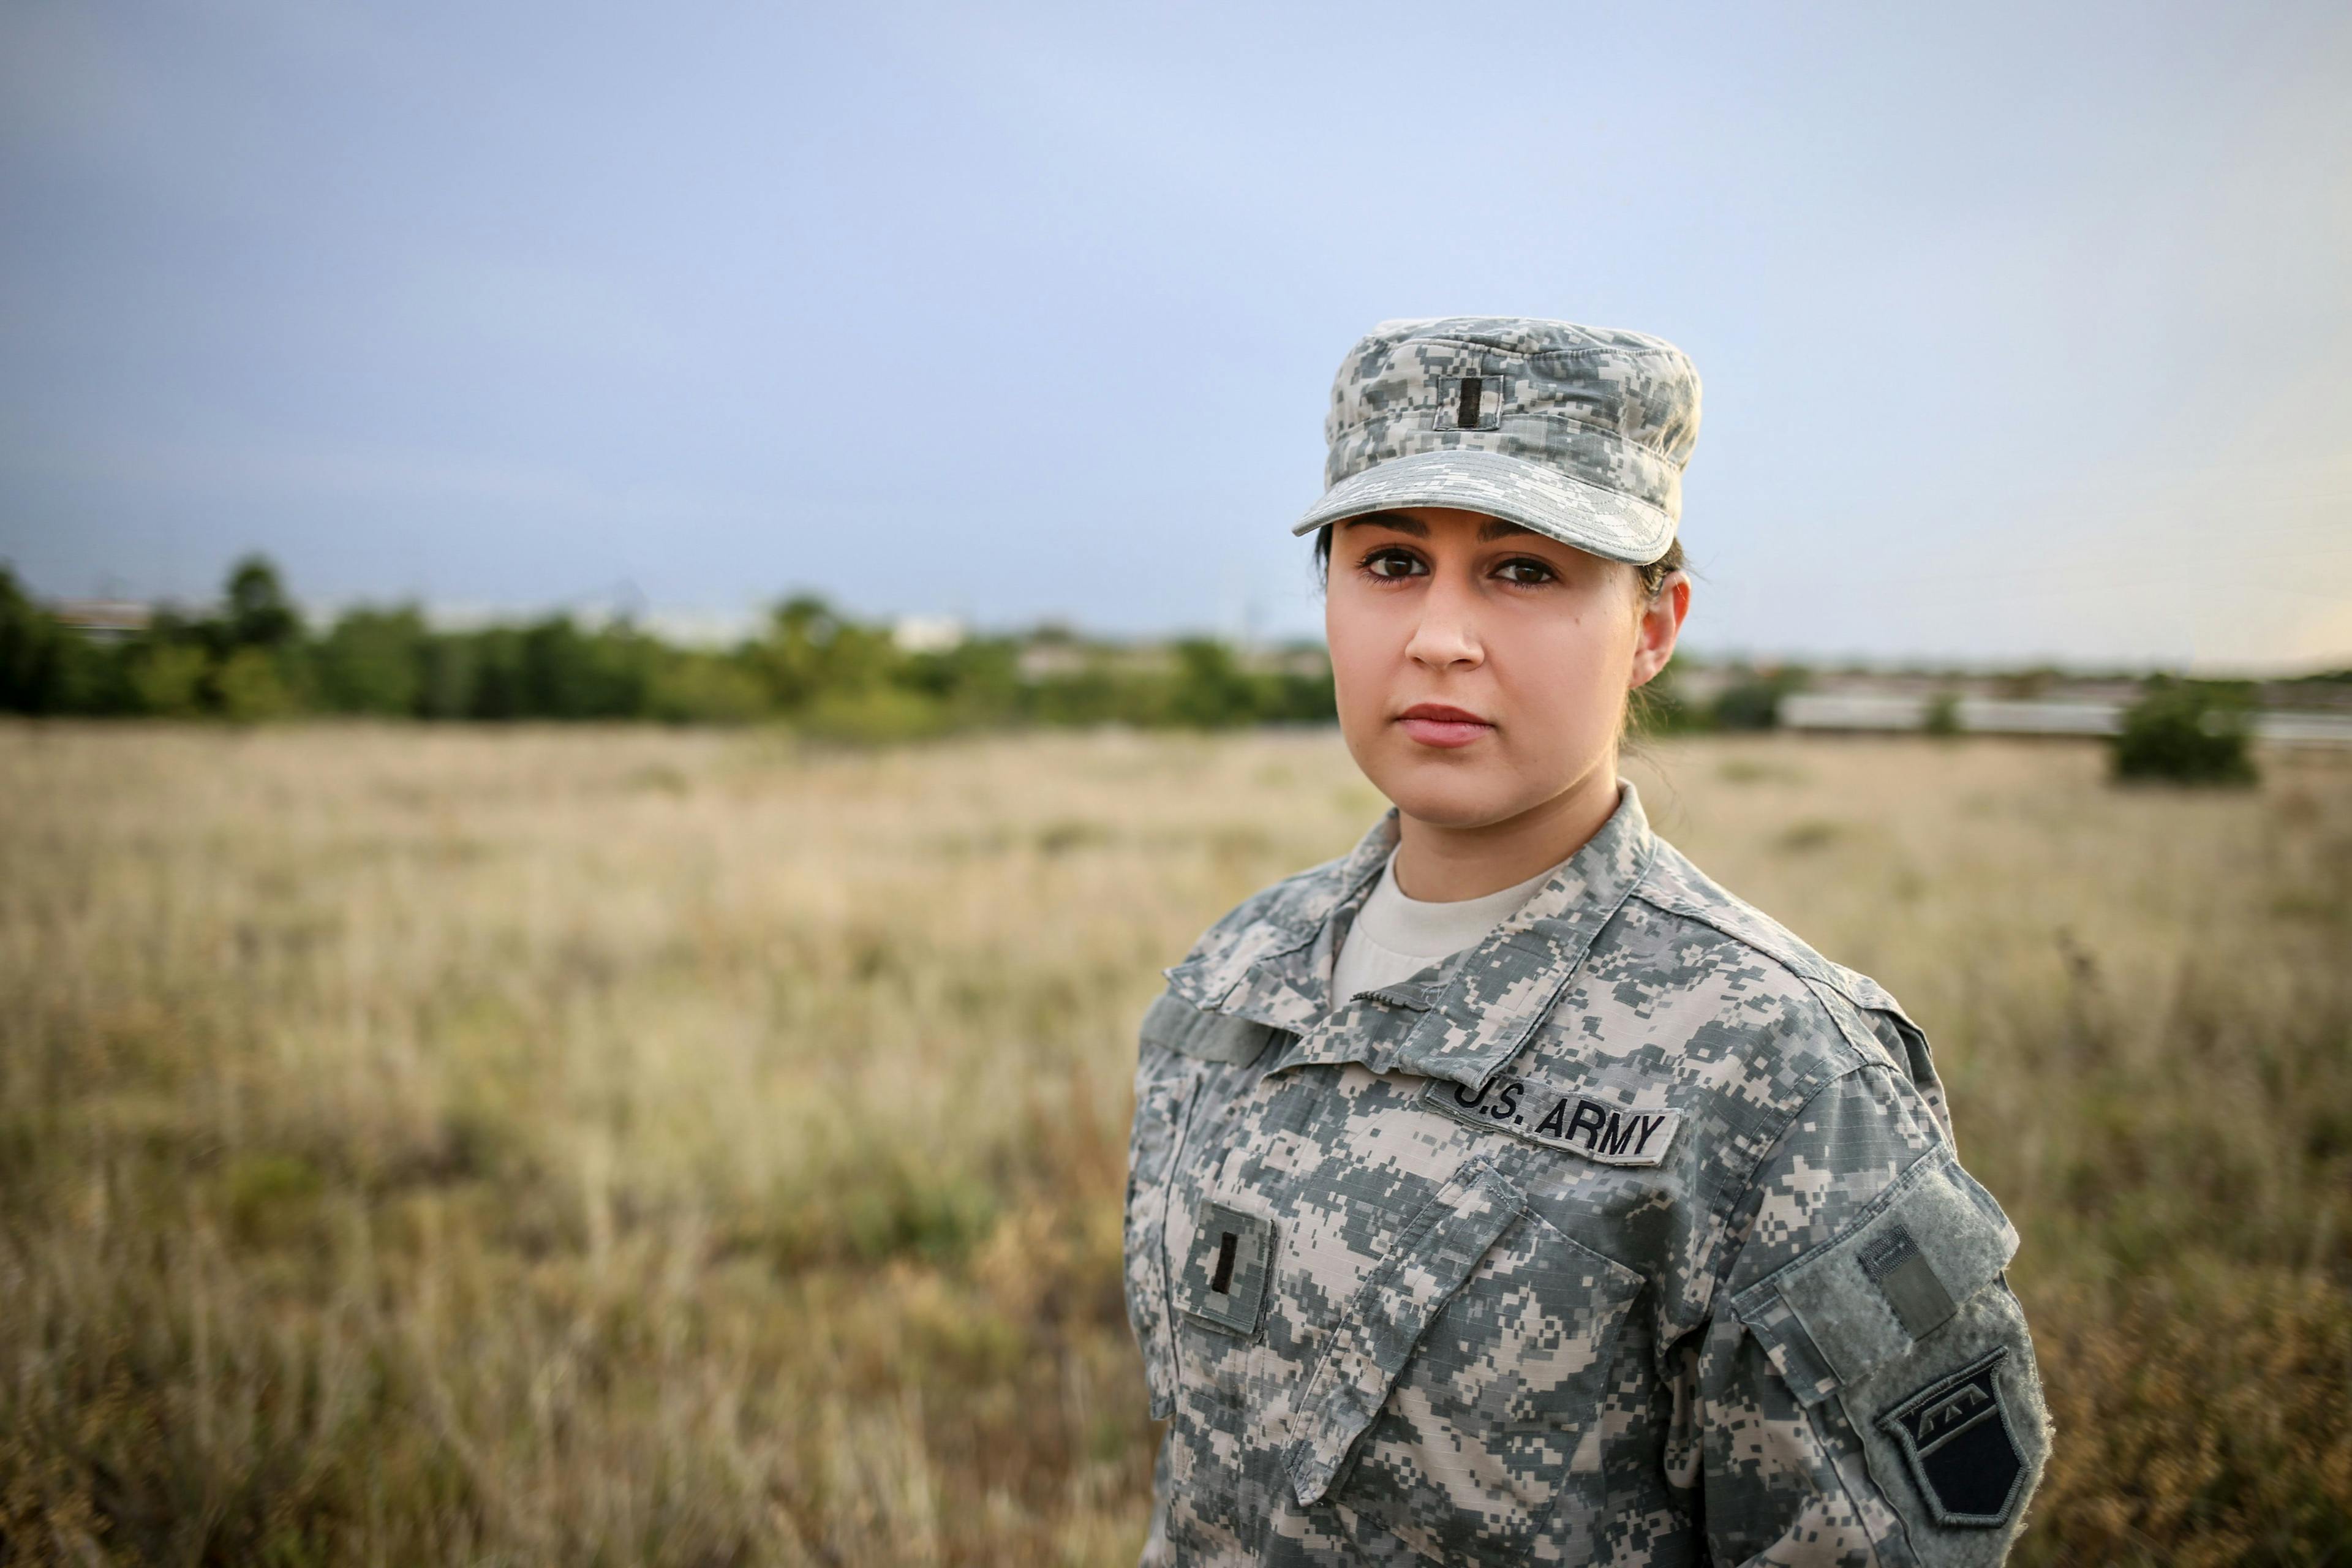 Female veterans with PTSD at higher risk of heart disease